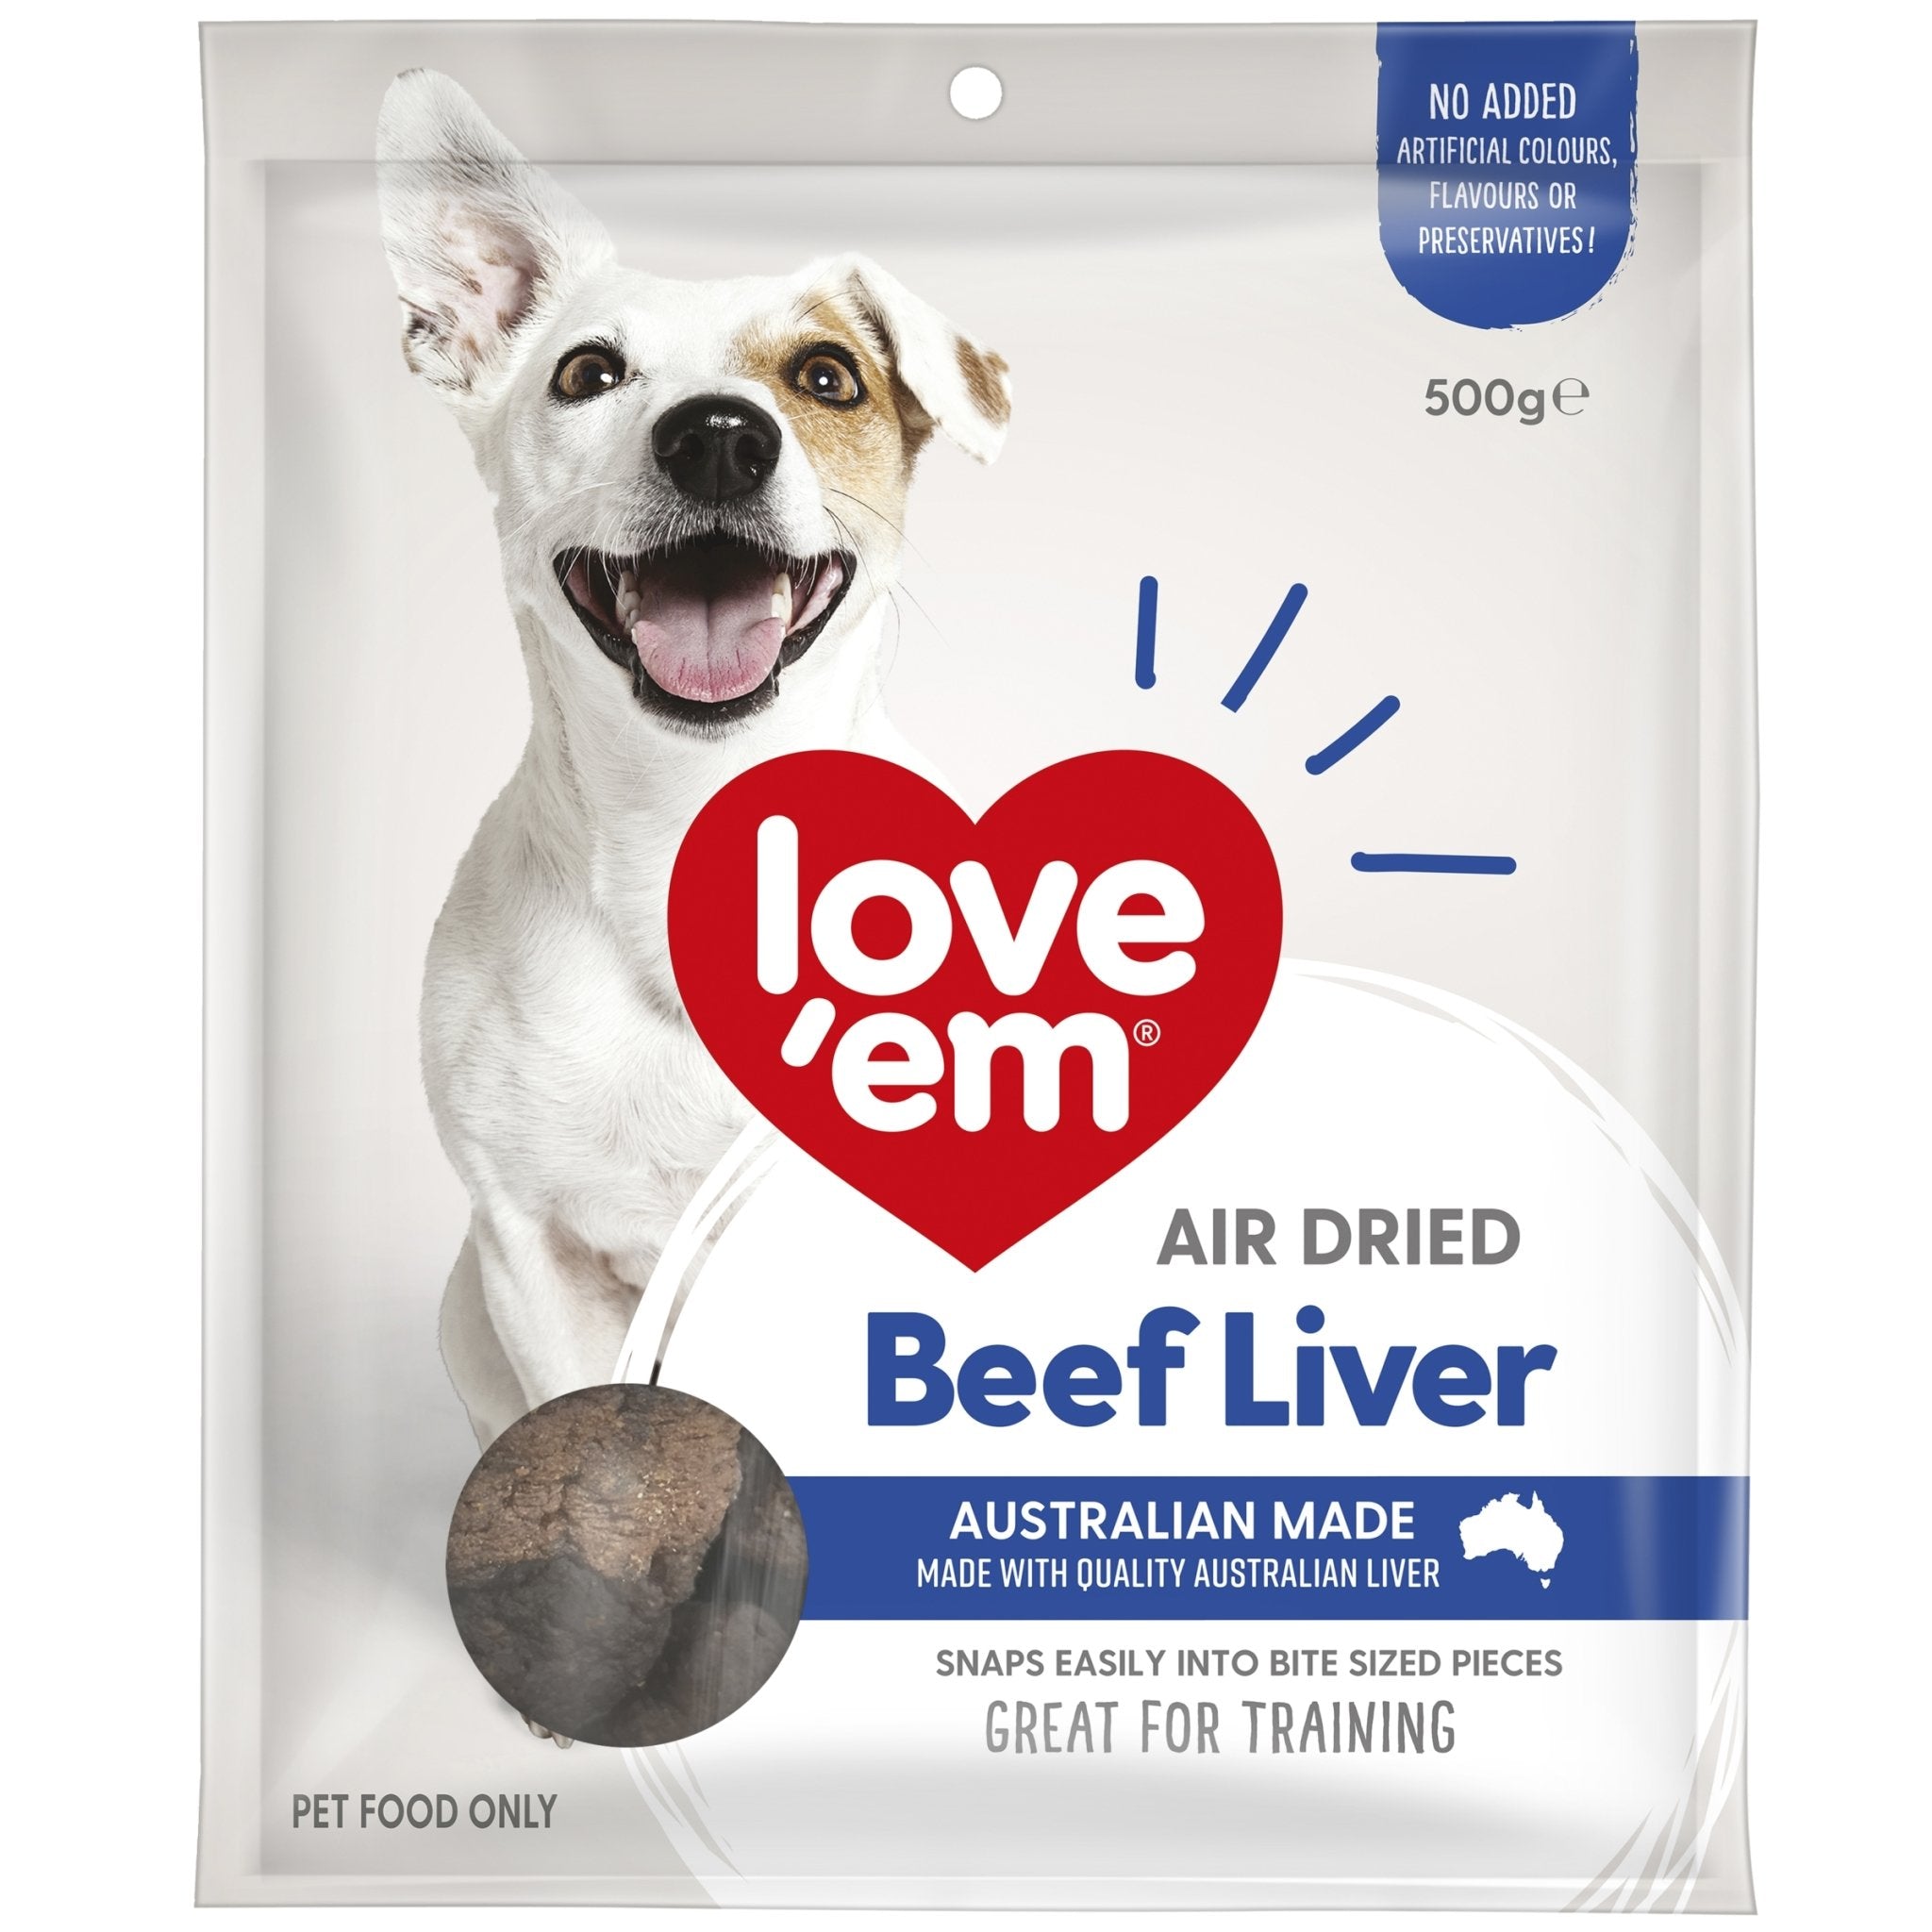 love'em Air Dried Beef Liver Dog Treats 500g